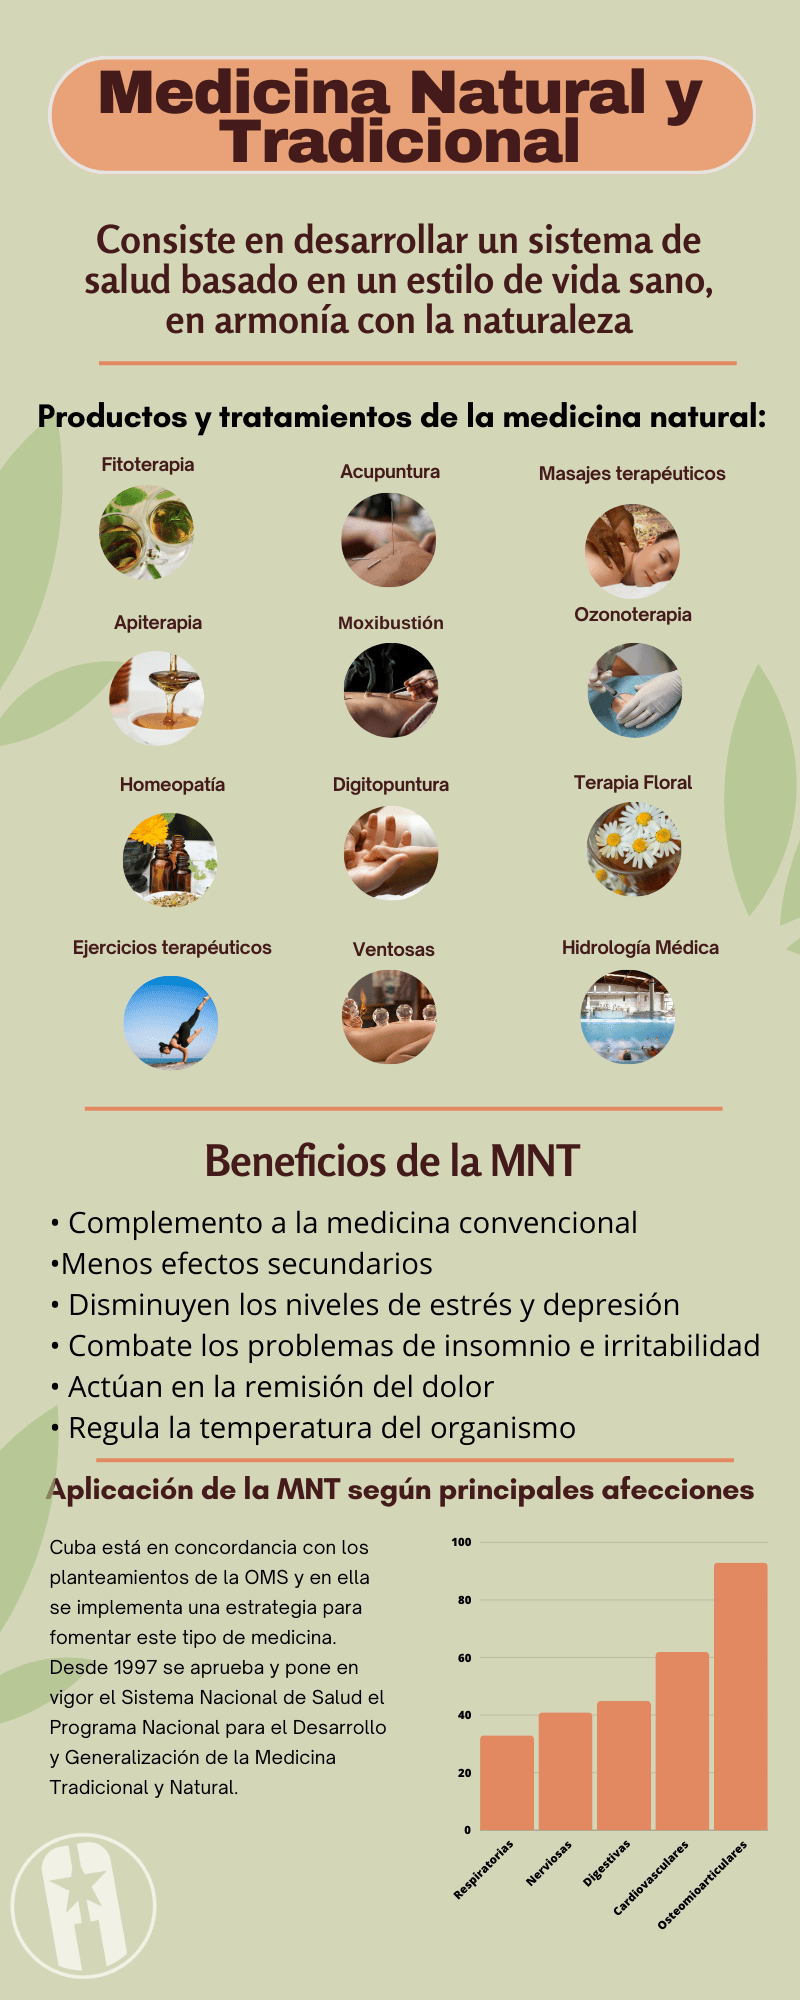 Medicina natural y tradicional en Cuba